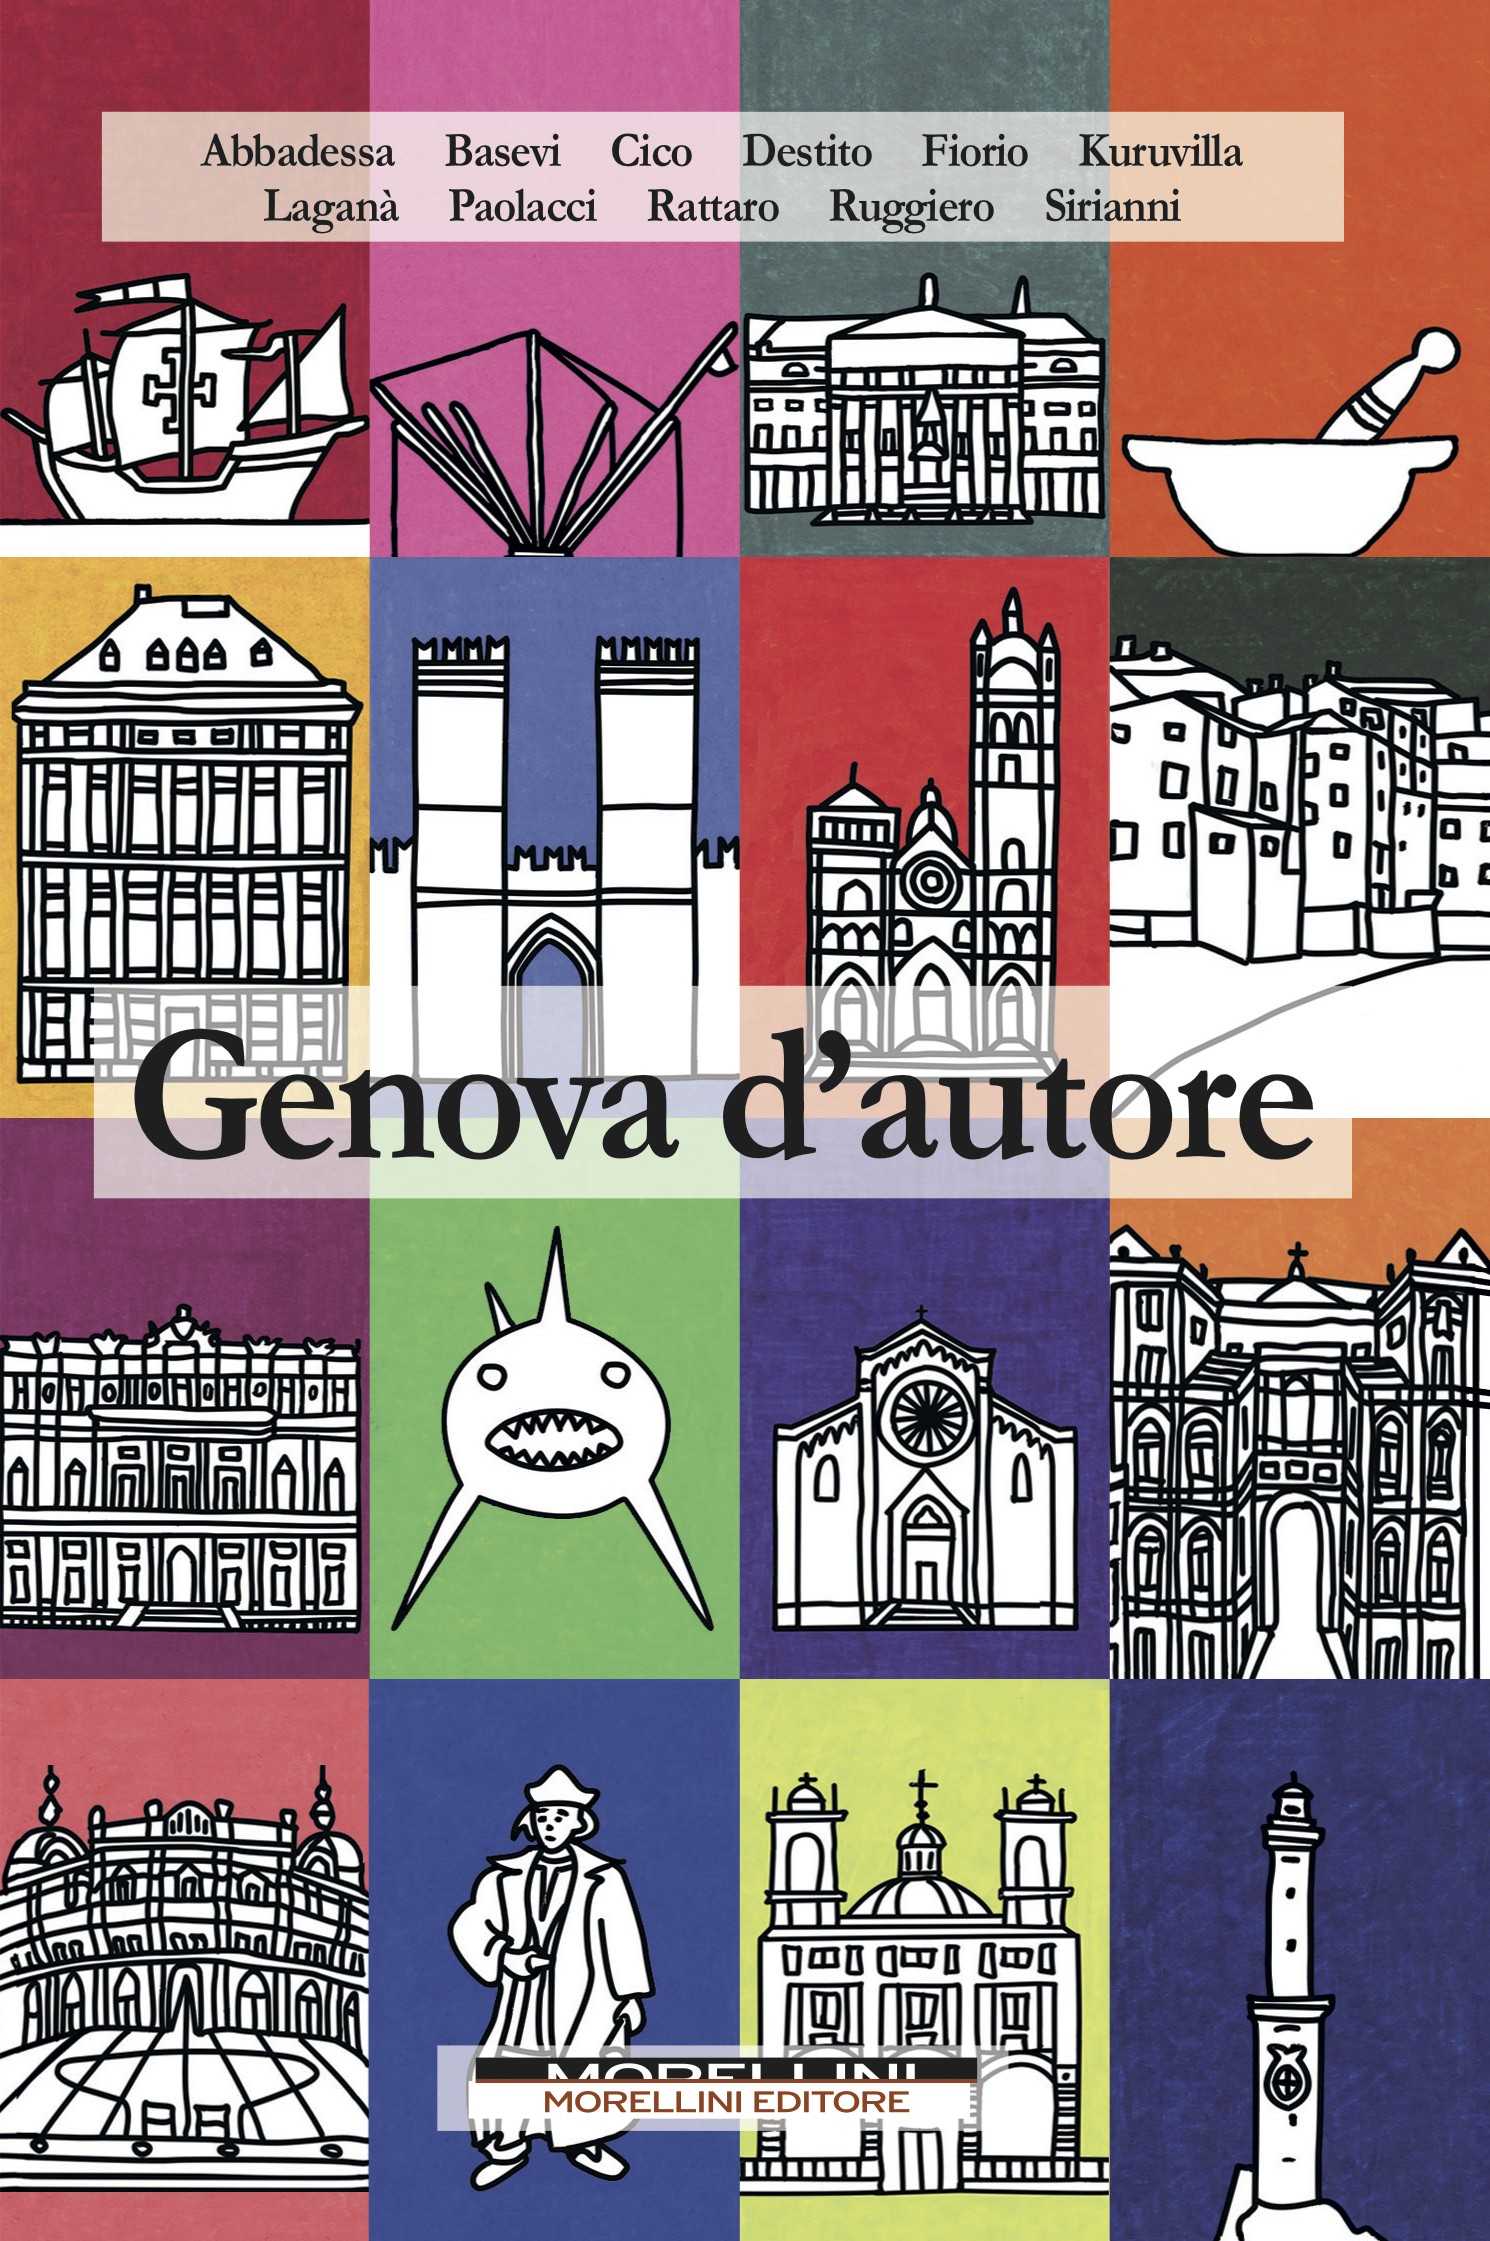 Genova d'autore - Librerie.coop